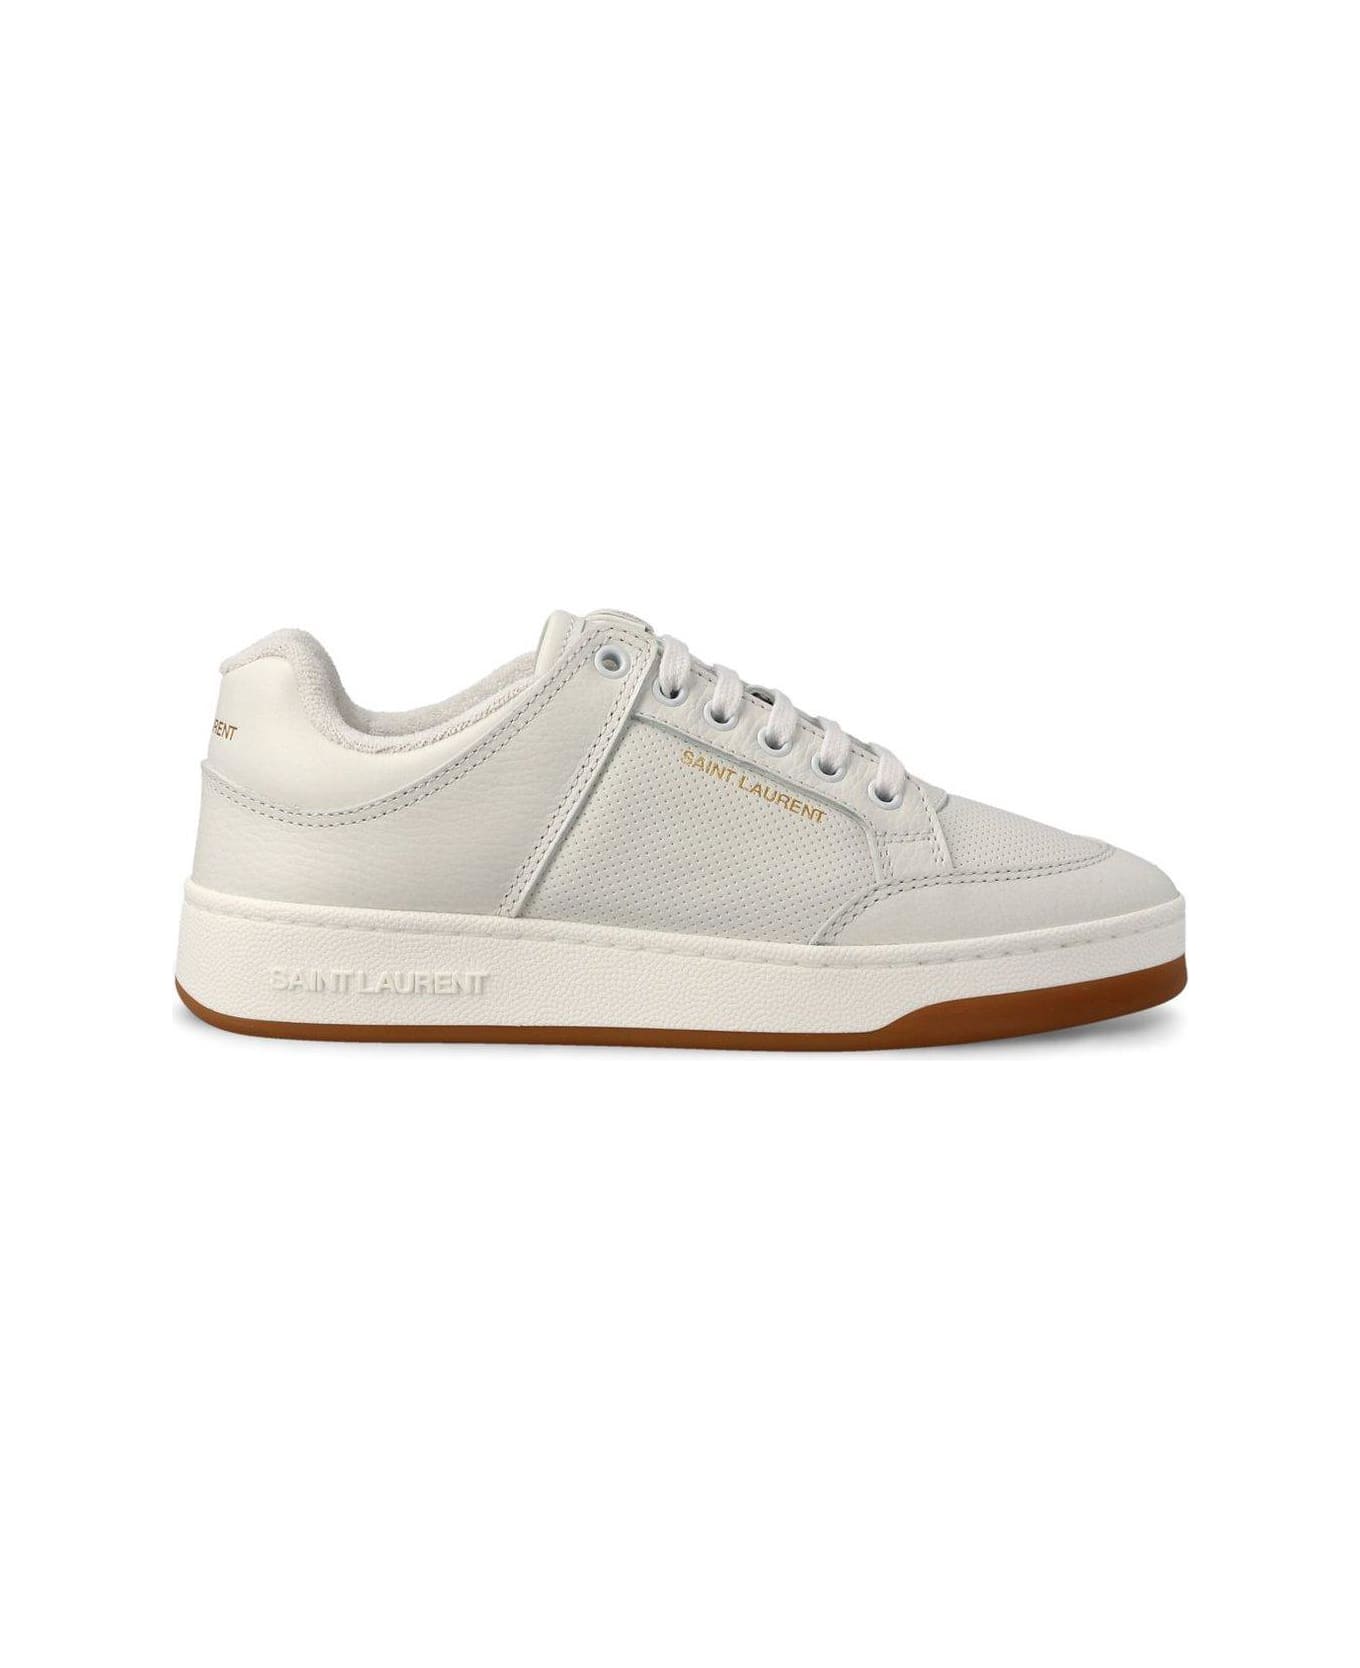 Saint Laurent Sl/61 Lace-up Sneakers - Blanc Opt/blanc Opt/